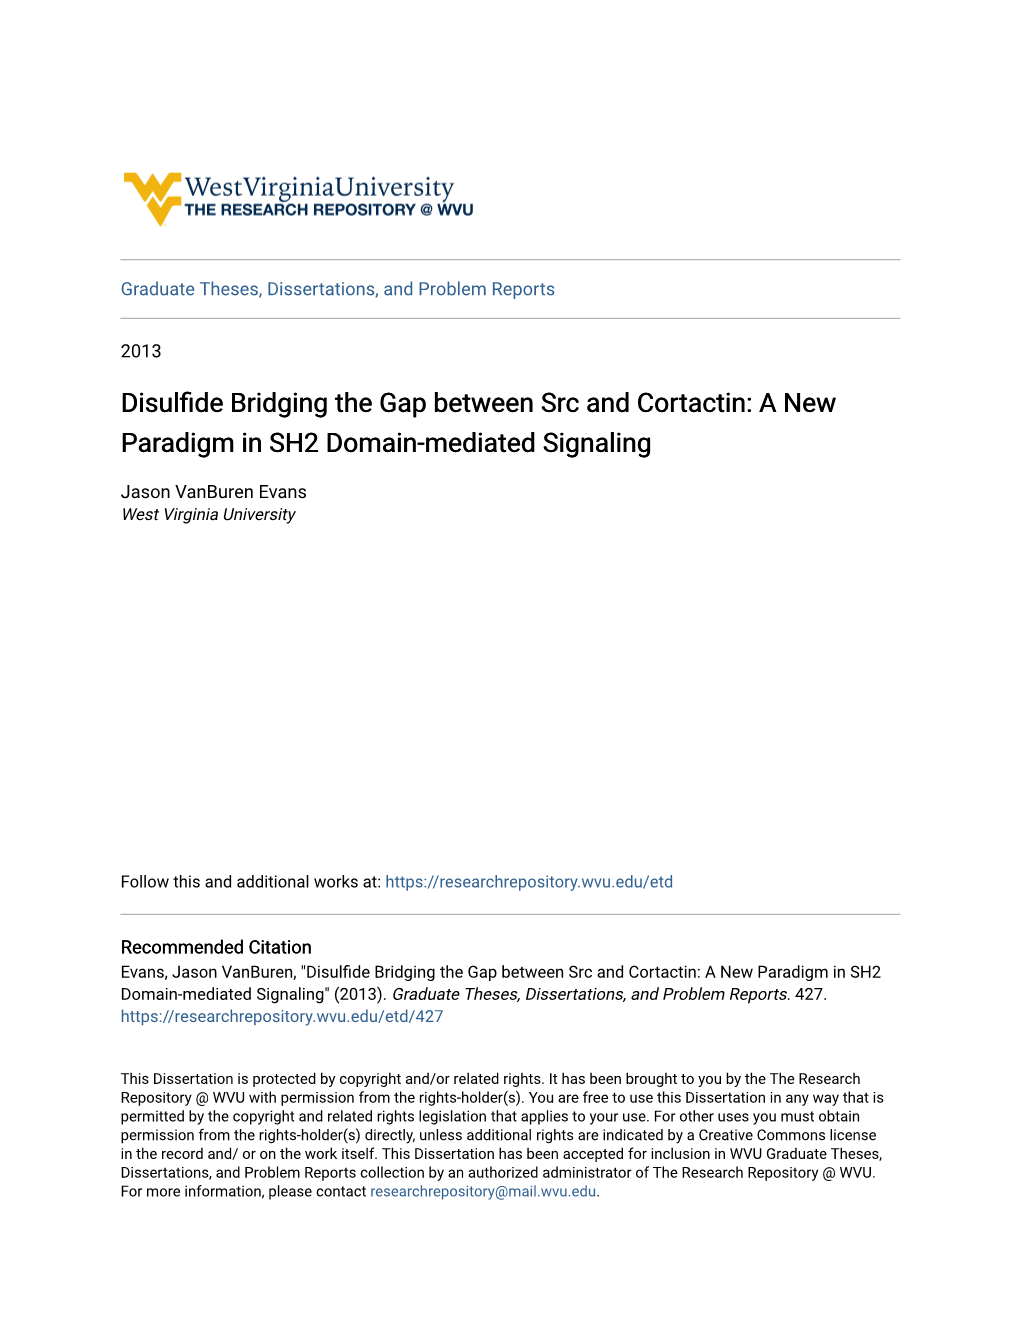 Disulfide Bridging the Gap Between Src and Cortactin: a New Paradigm in SH2 Domain-Mediated Signaling